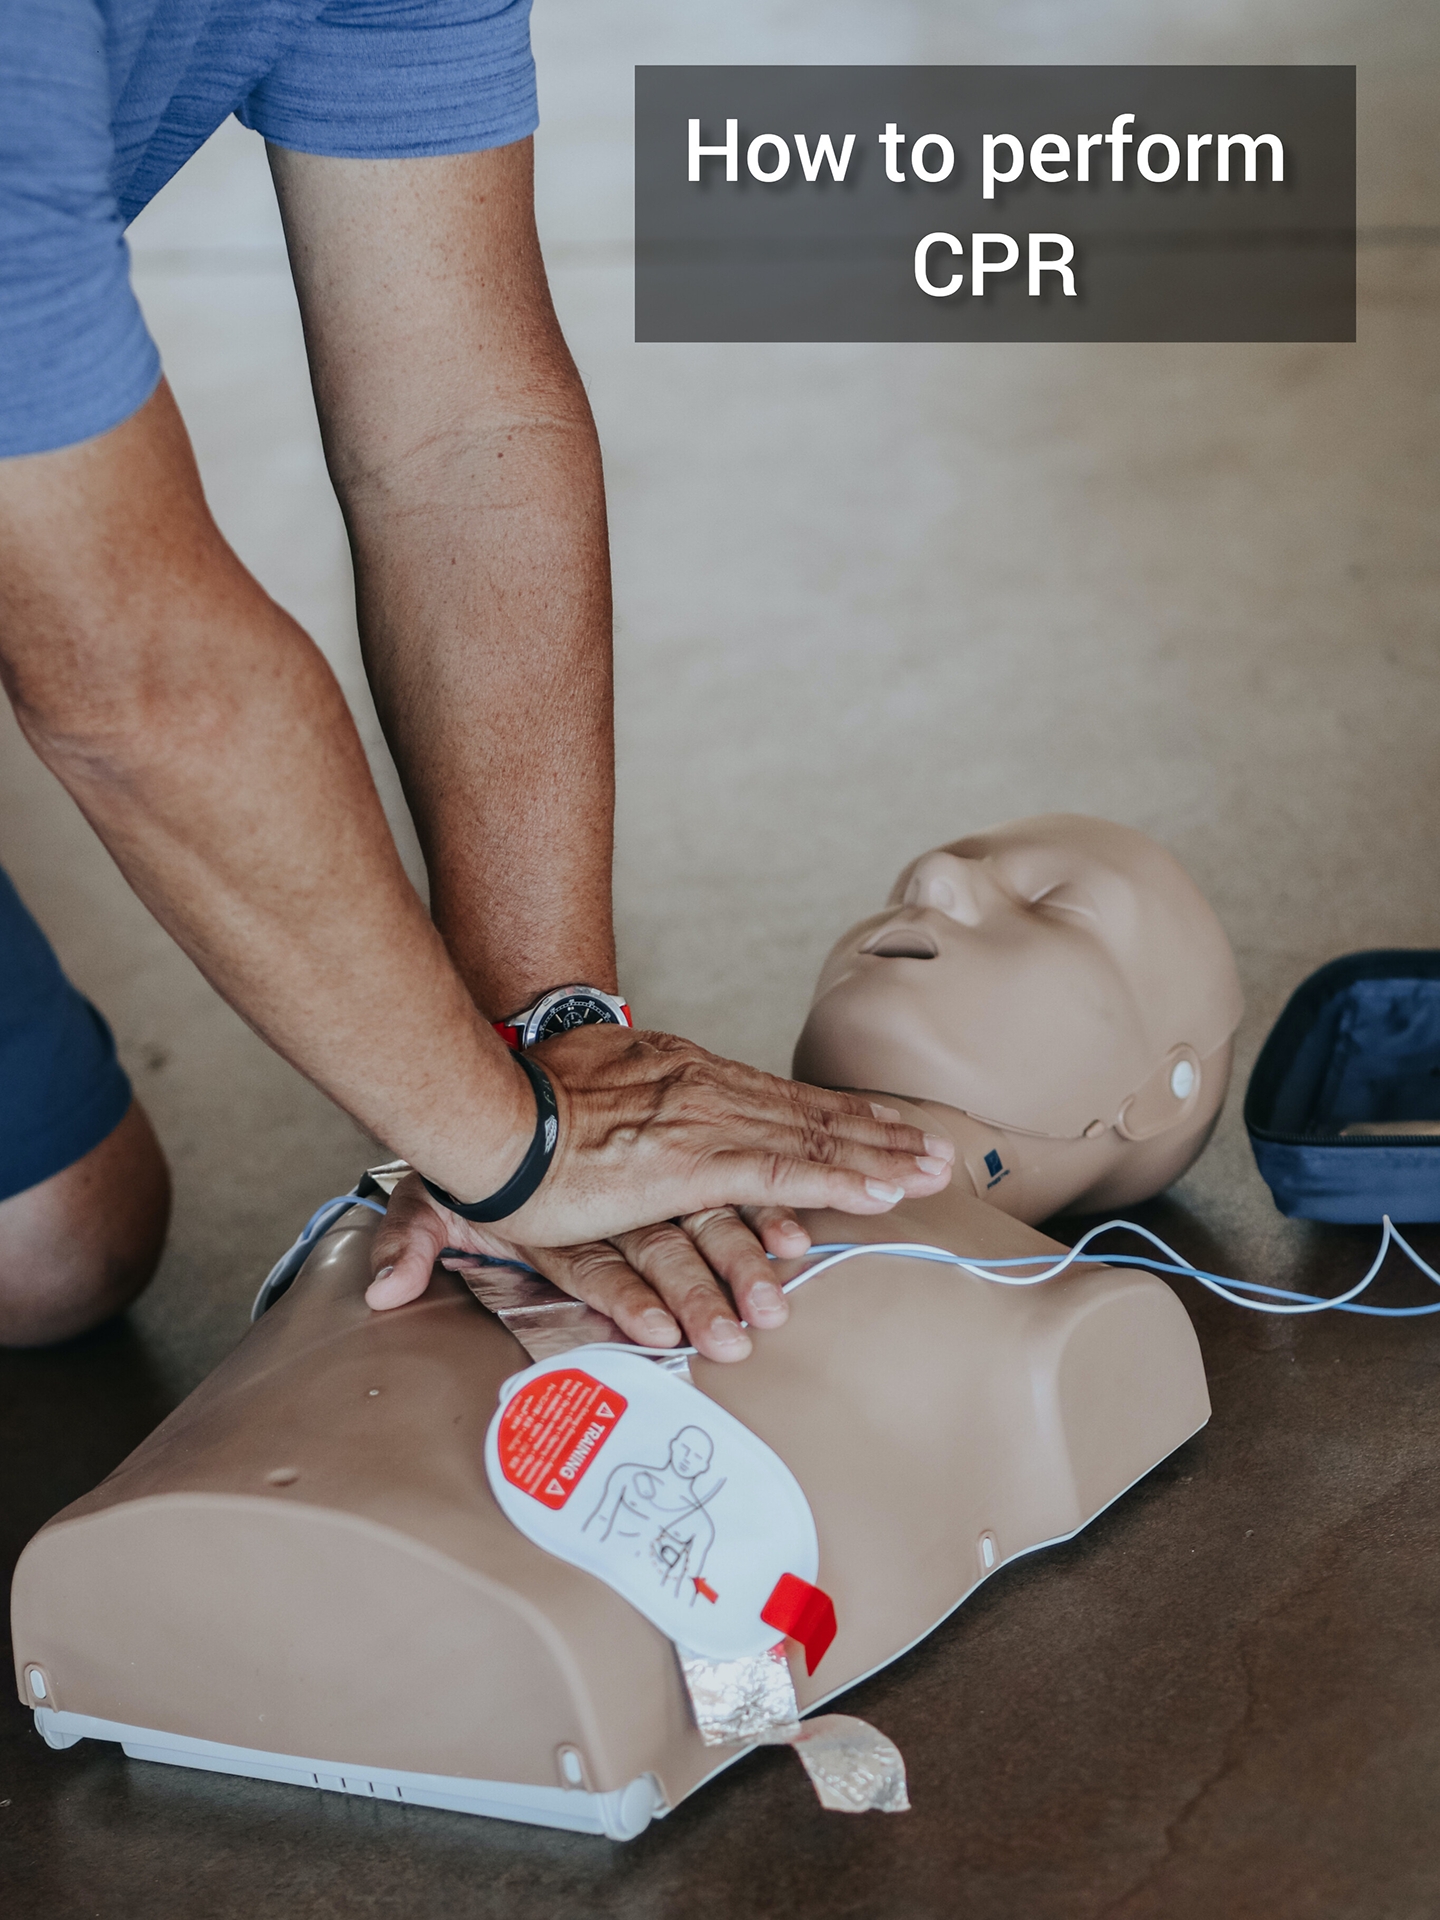 How do I perform CPR?